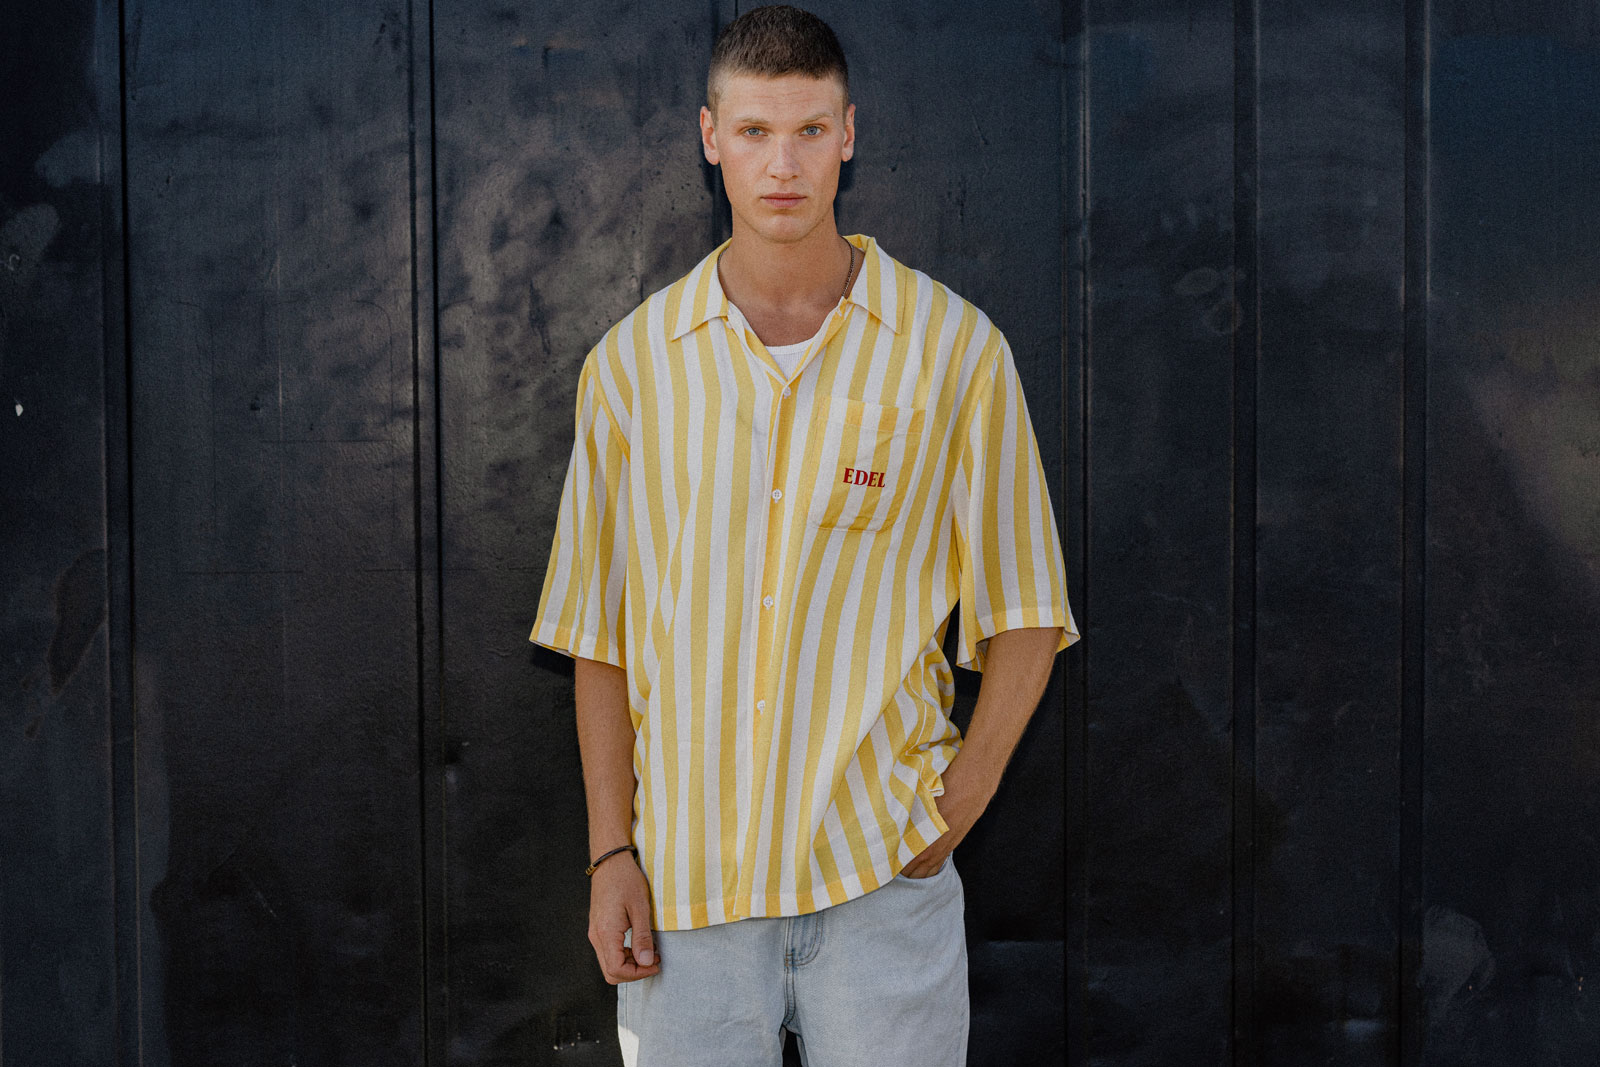 Edel Kurzarm-Hemd, Yellow Stripes